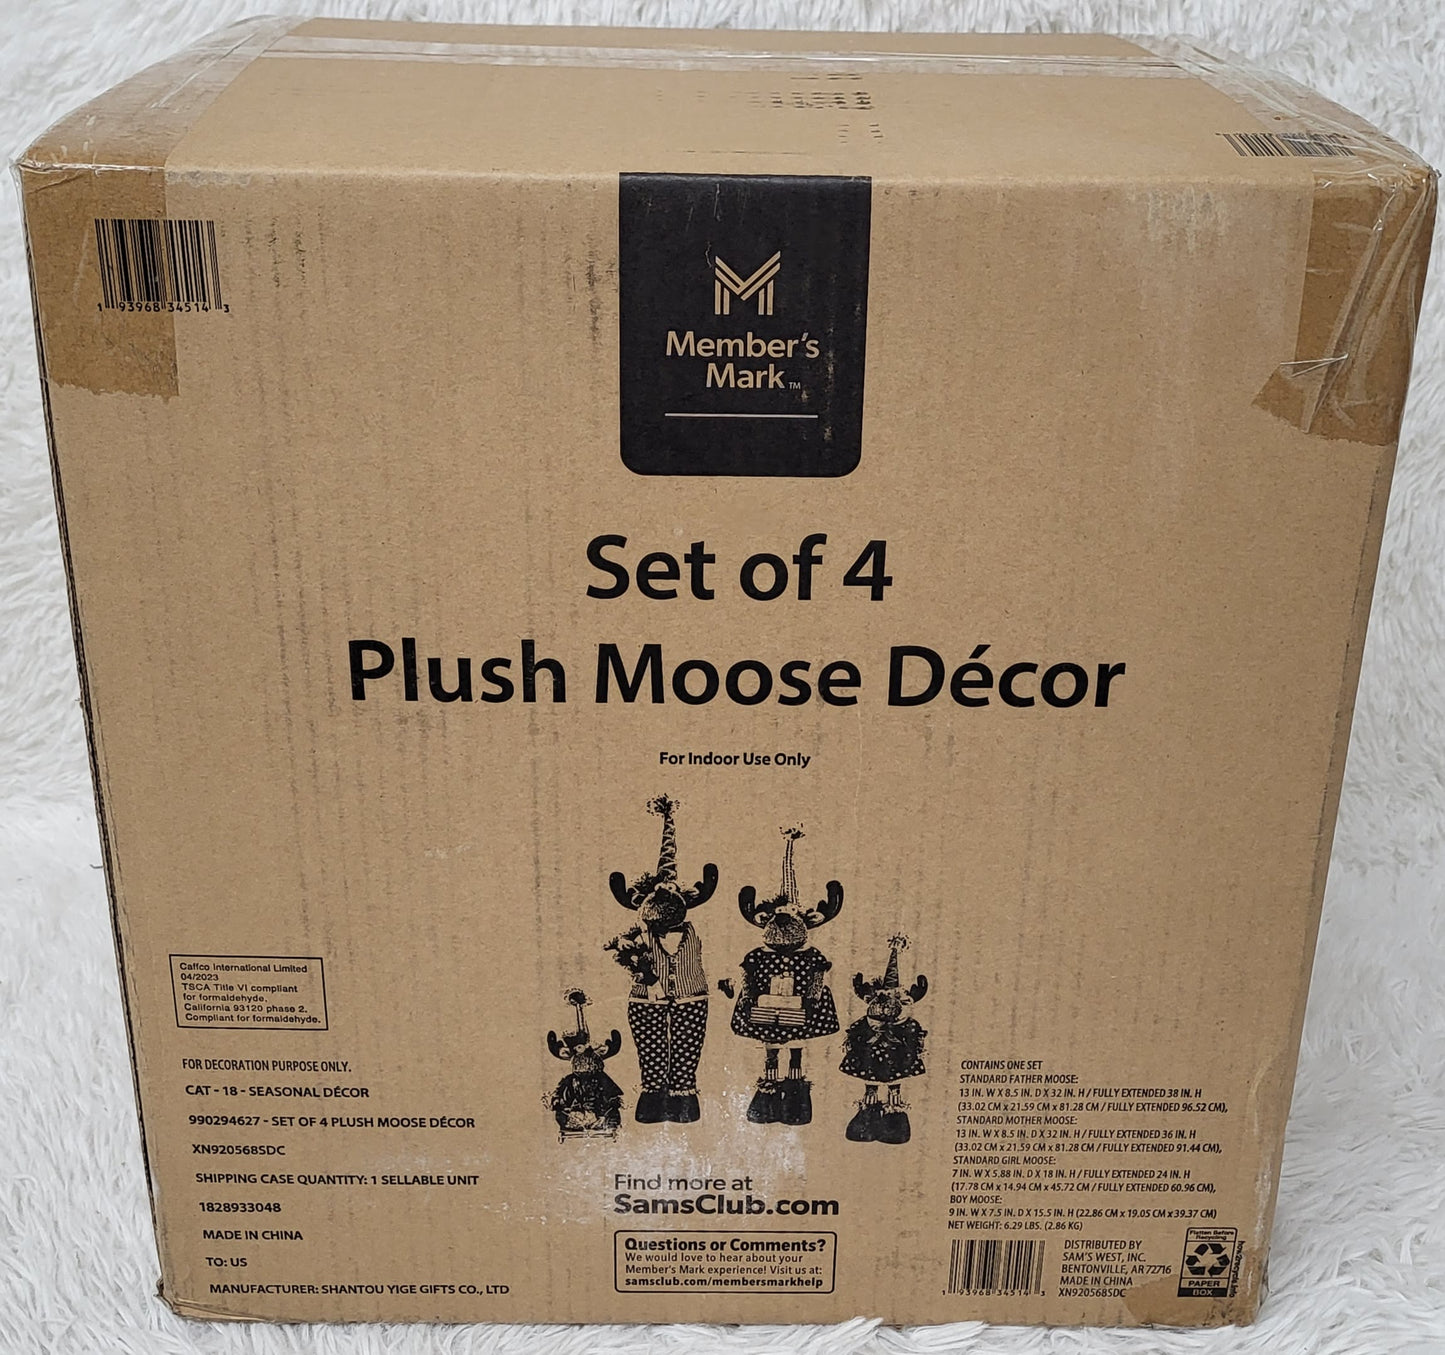 Member's Mark Plush Moose Décor, Set of 4